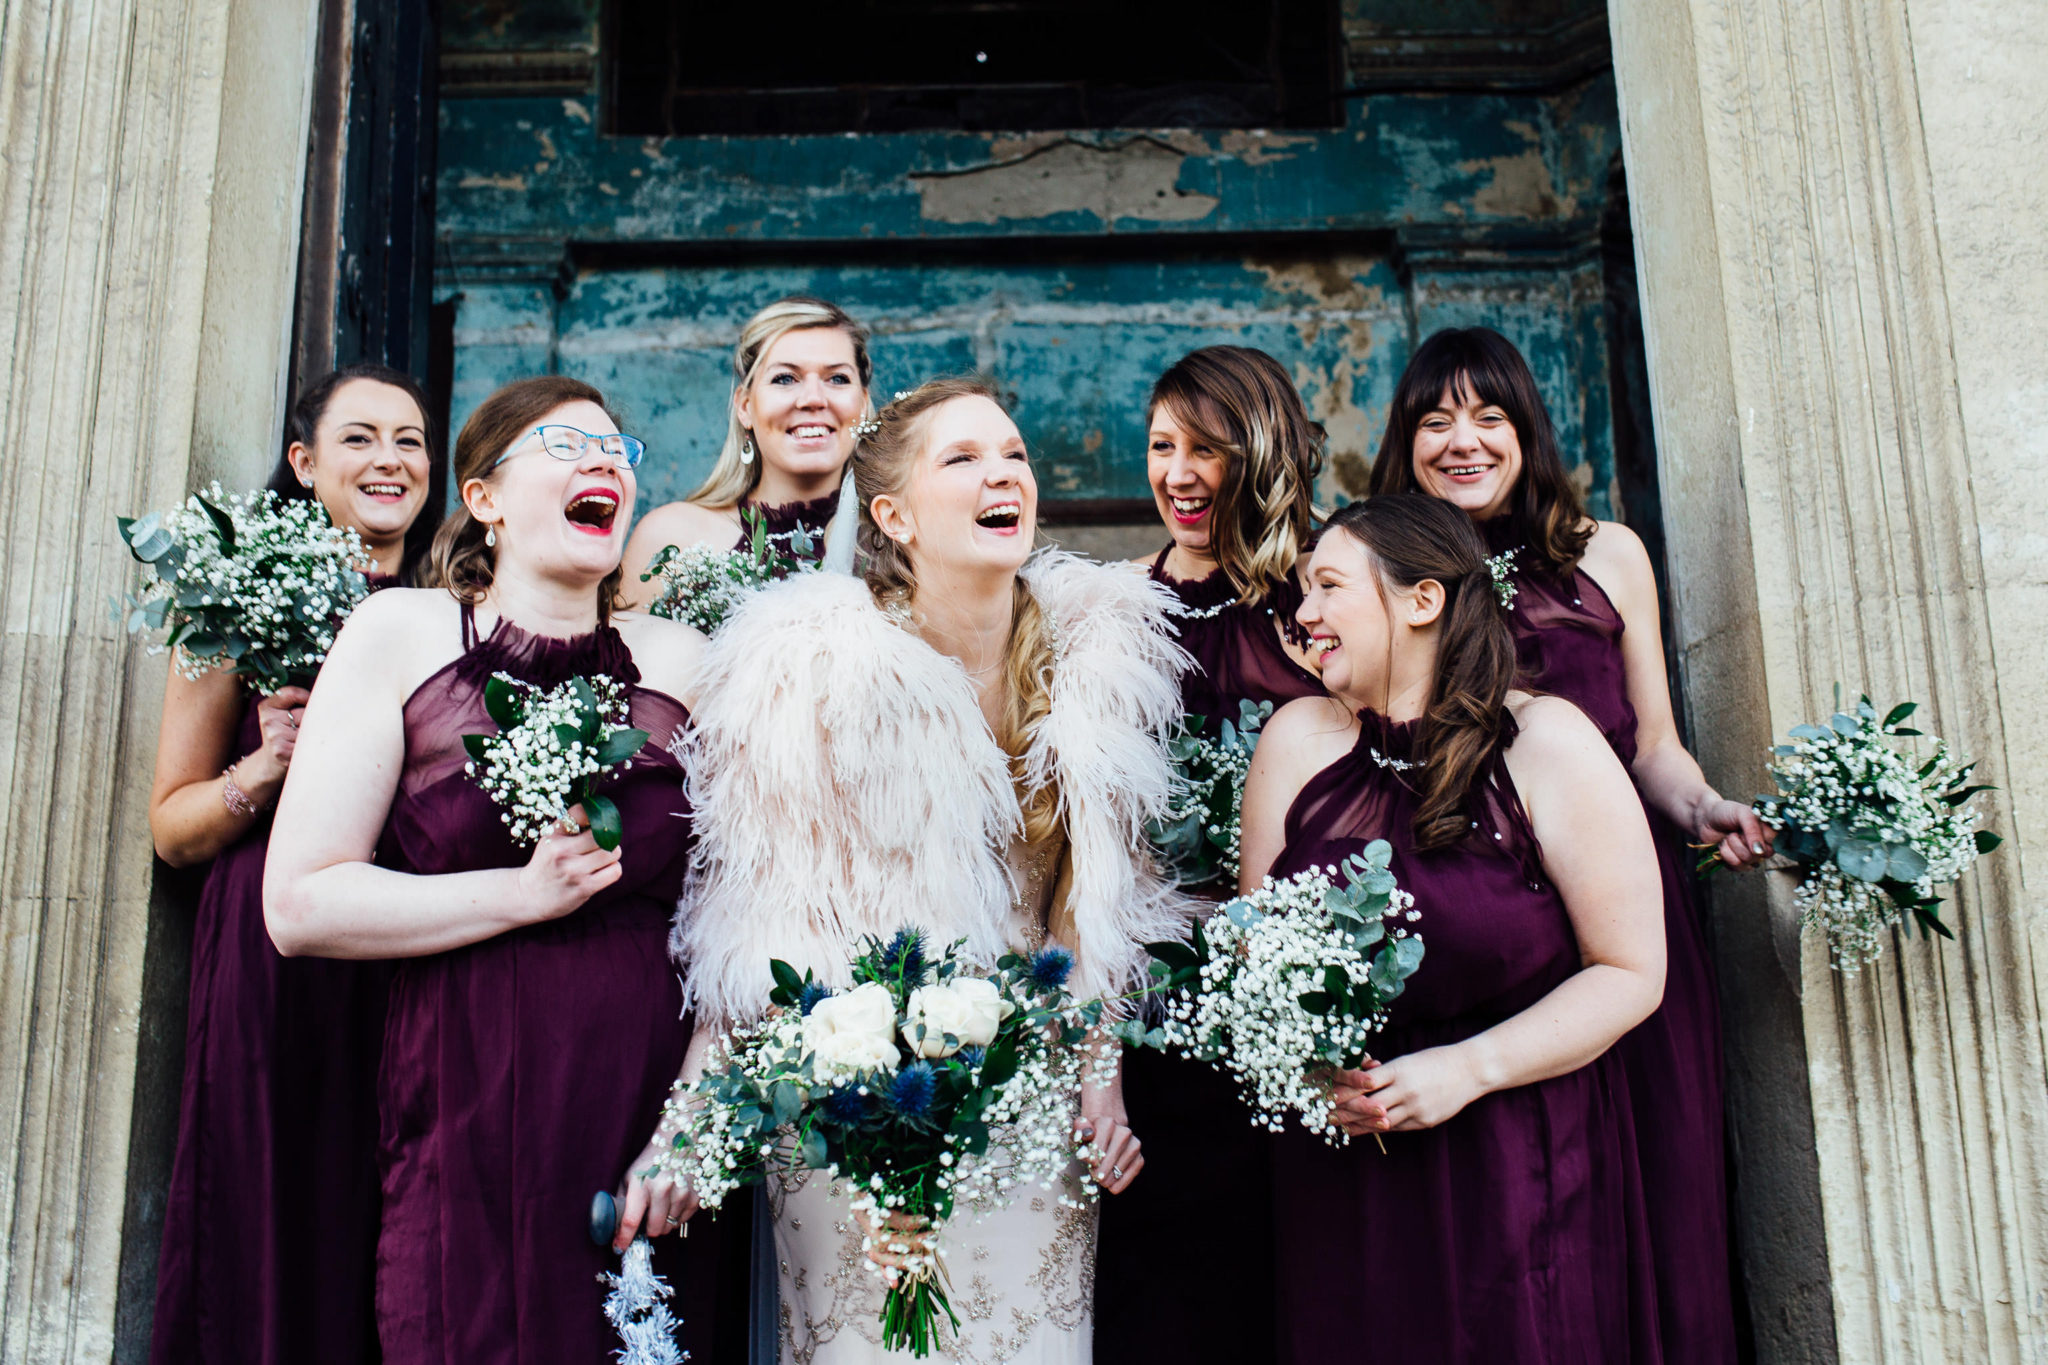 CEREMONY CANDIDS AT THE ASYLUM LONDON WEDDING PHOTOGRAPHY BRIDESMAIDS GROOMSMEN